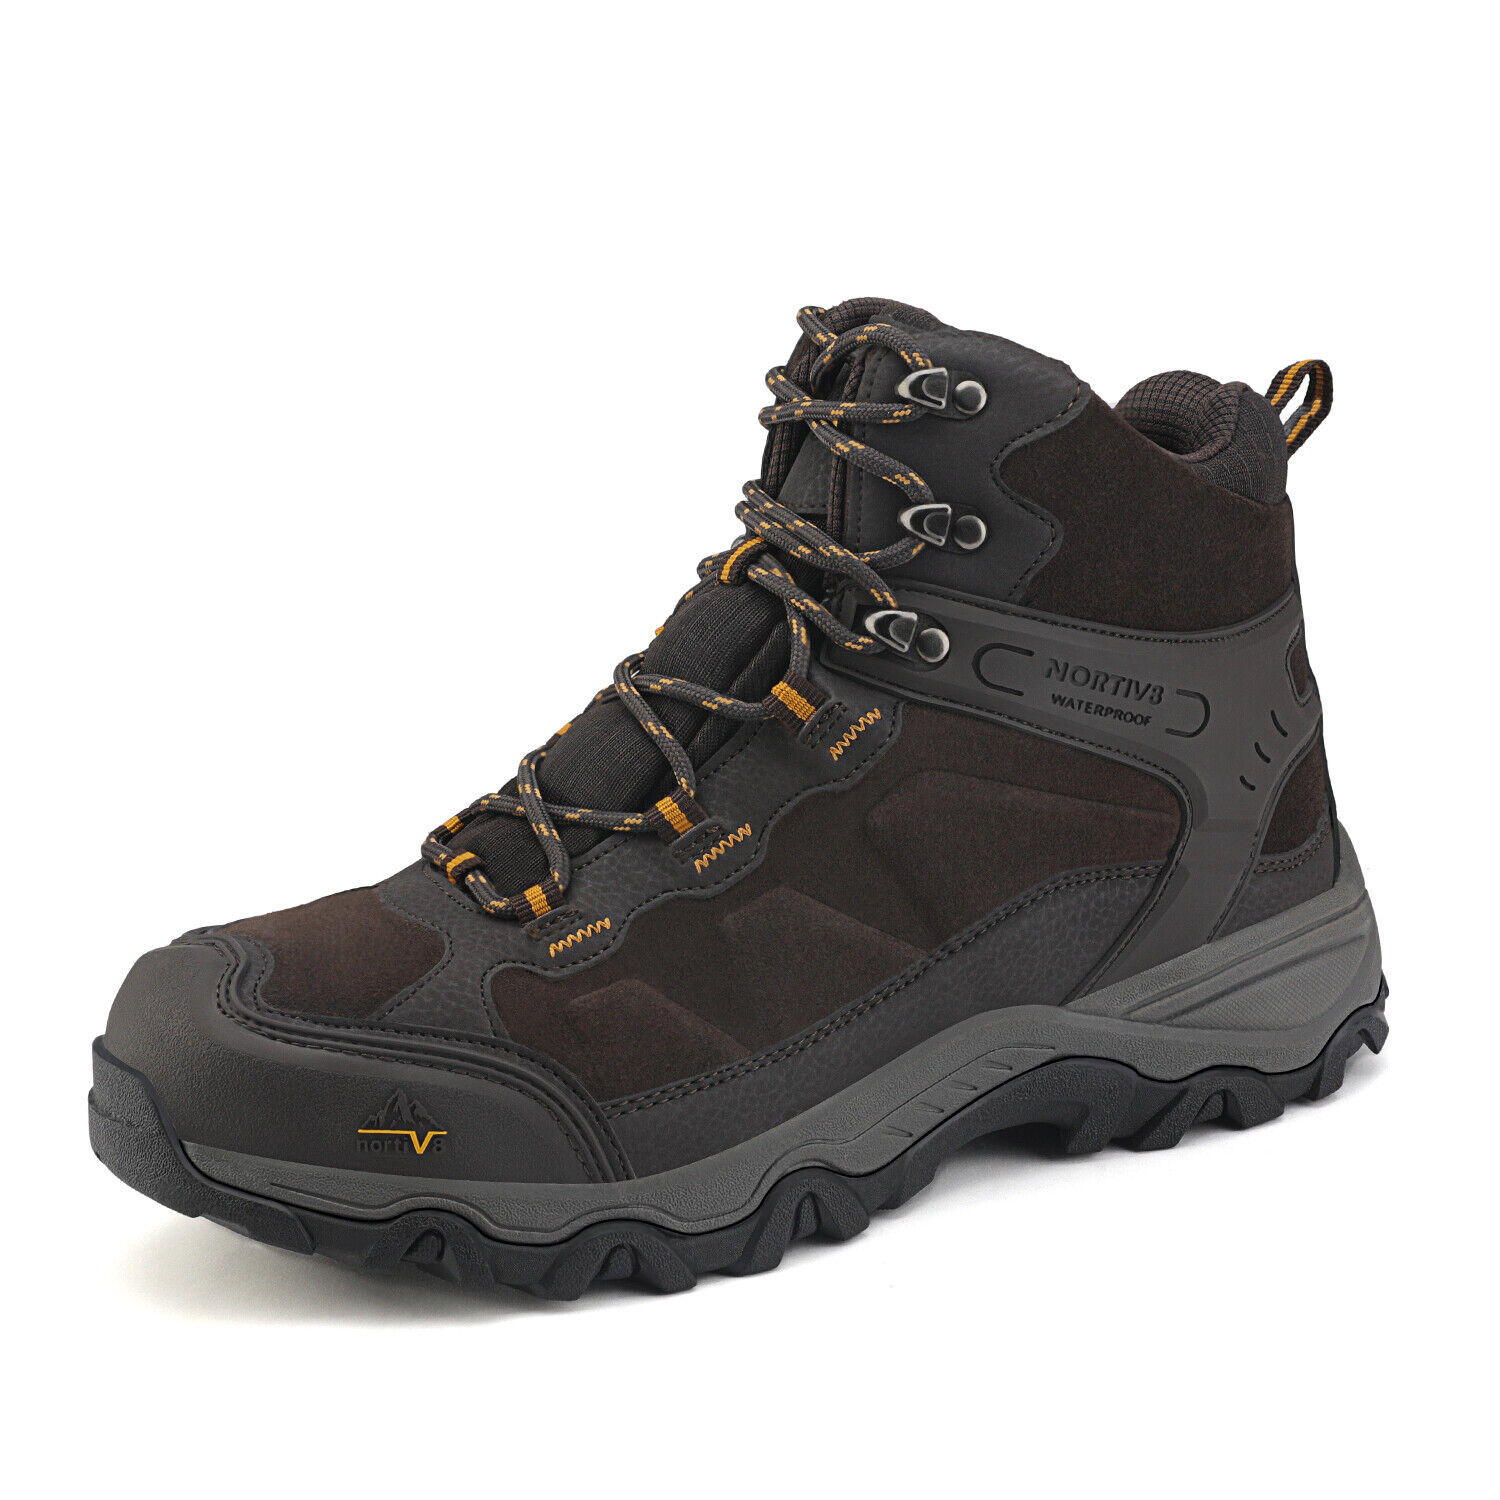 Men's Waterproof Hiking Boots Outdoor Lightweight Breathable Trekking Shoes